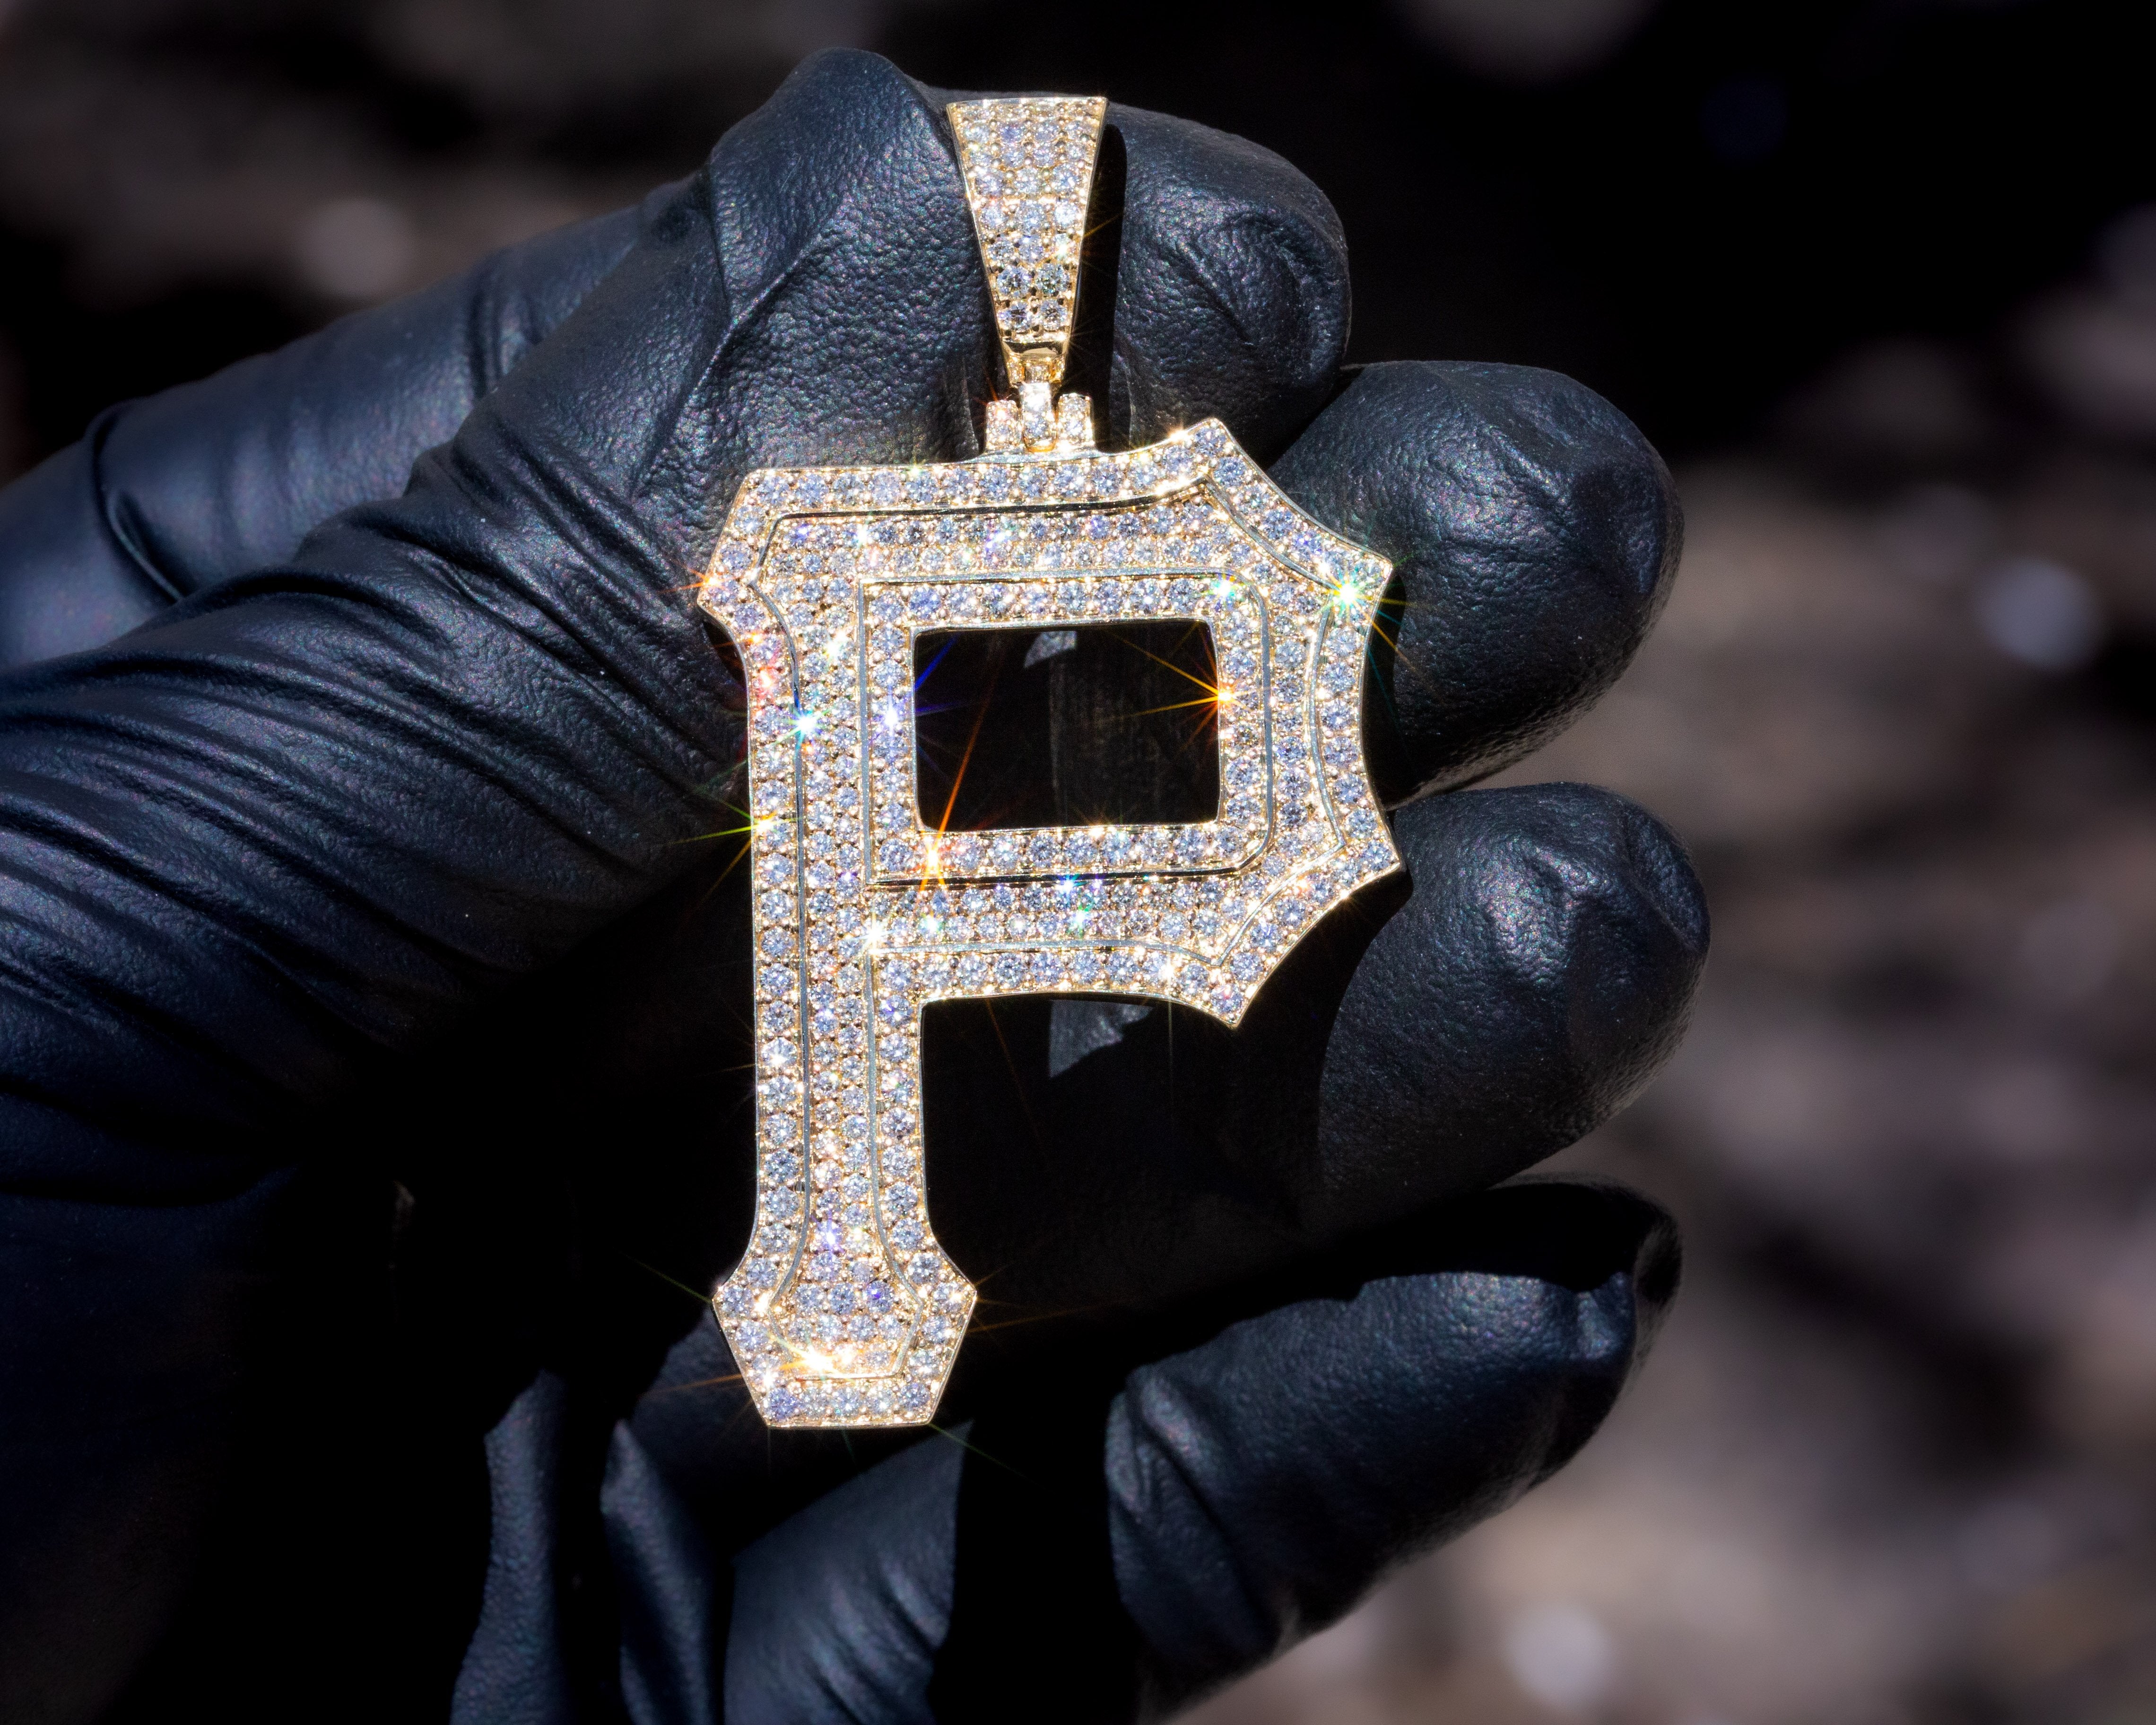 3.00 CT. Diamond Letter "P" Pendant in 10KT Gold - White Carat - USA & Canada